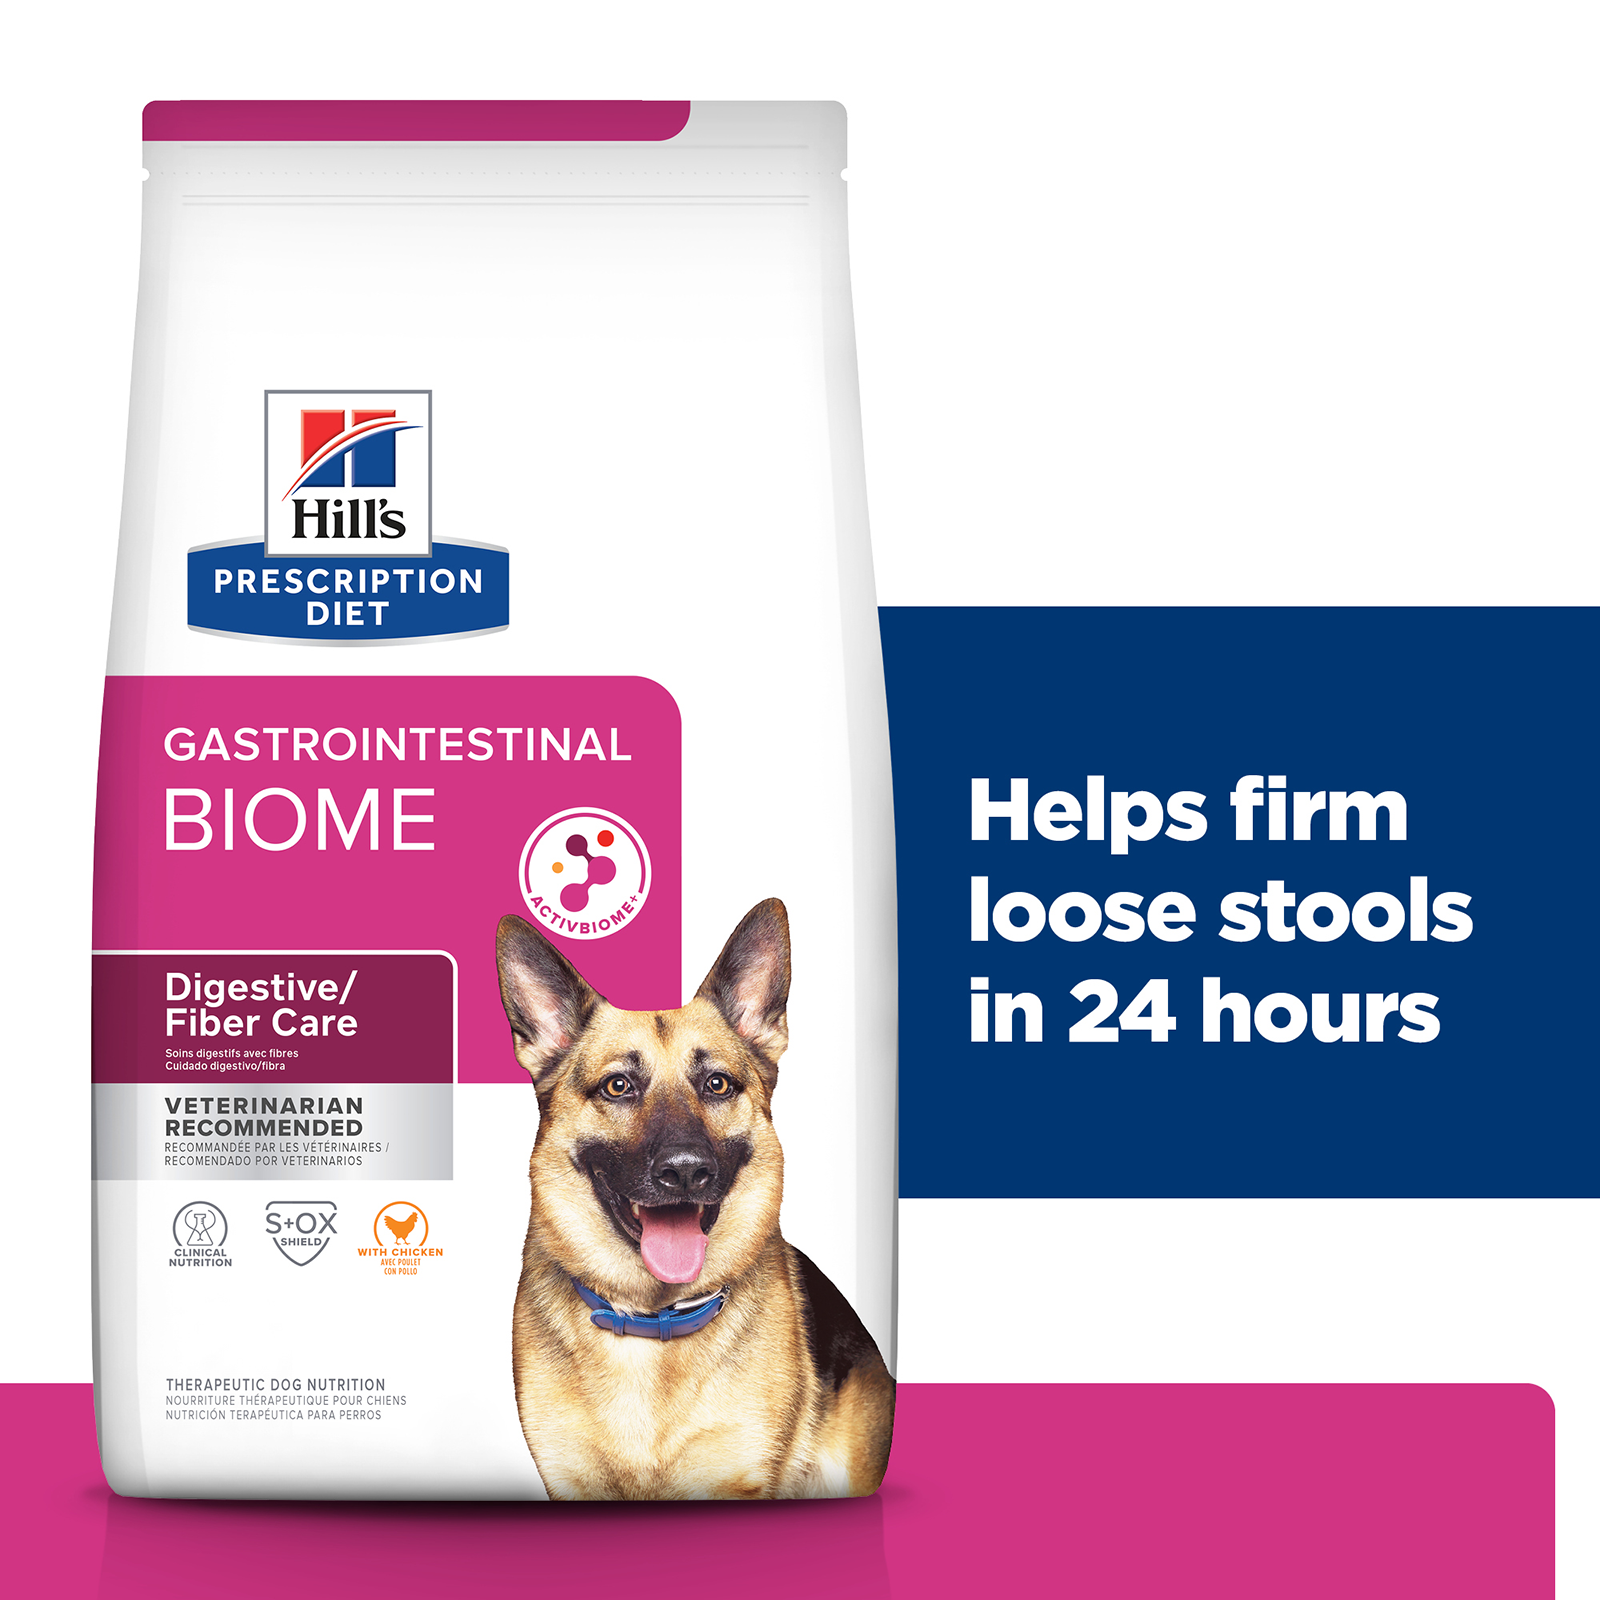 Hill's Prescription Diet Dog Food Gastrointestinal Biome Digestive/Fibre Care with Chicken